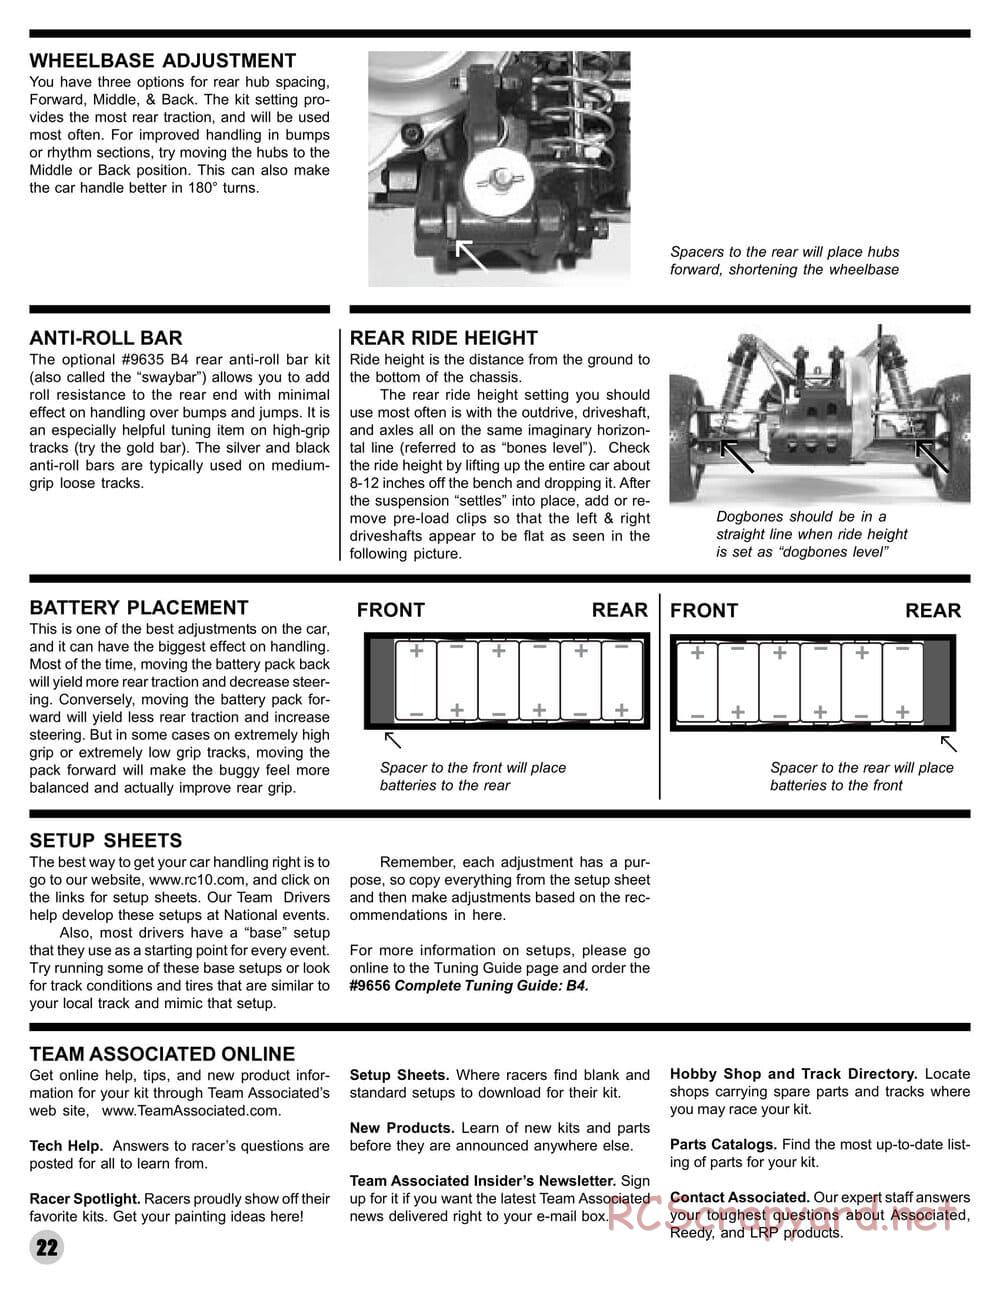 Team Associated - RC10 B4 SE - RTR - Manual - Page 20